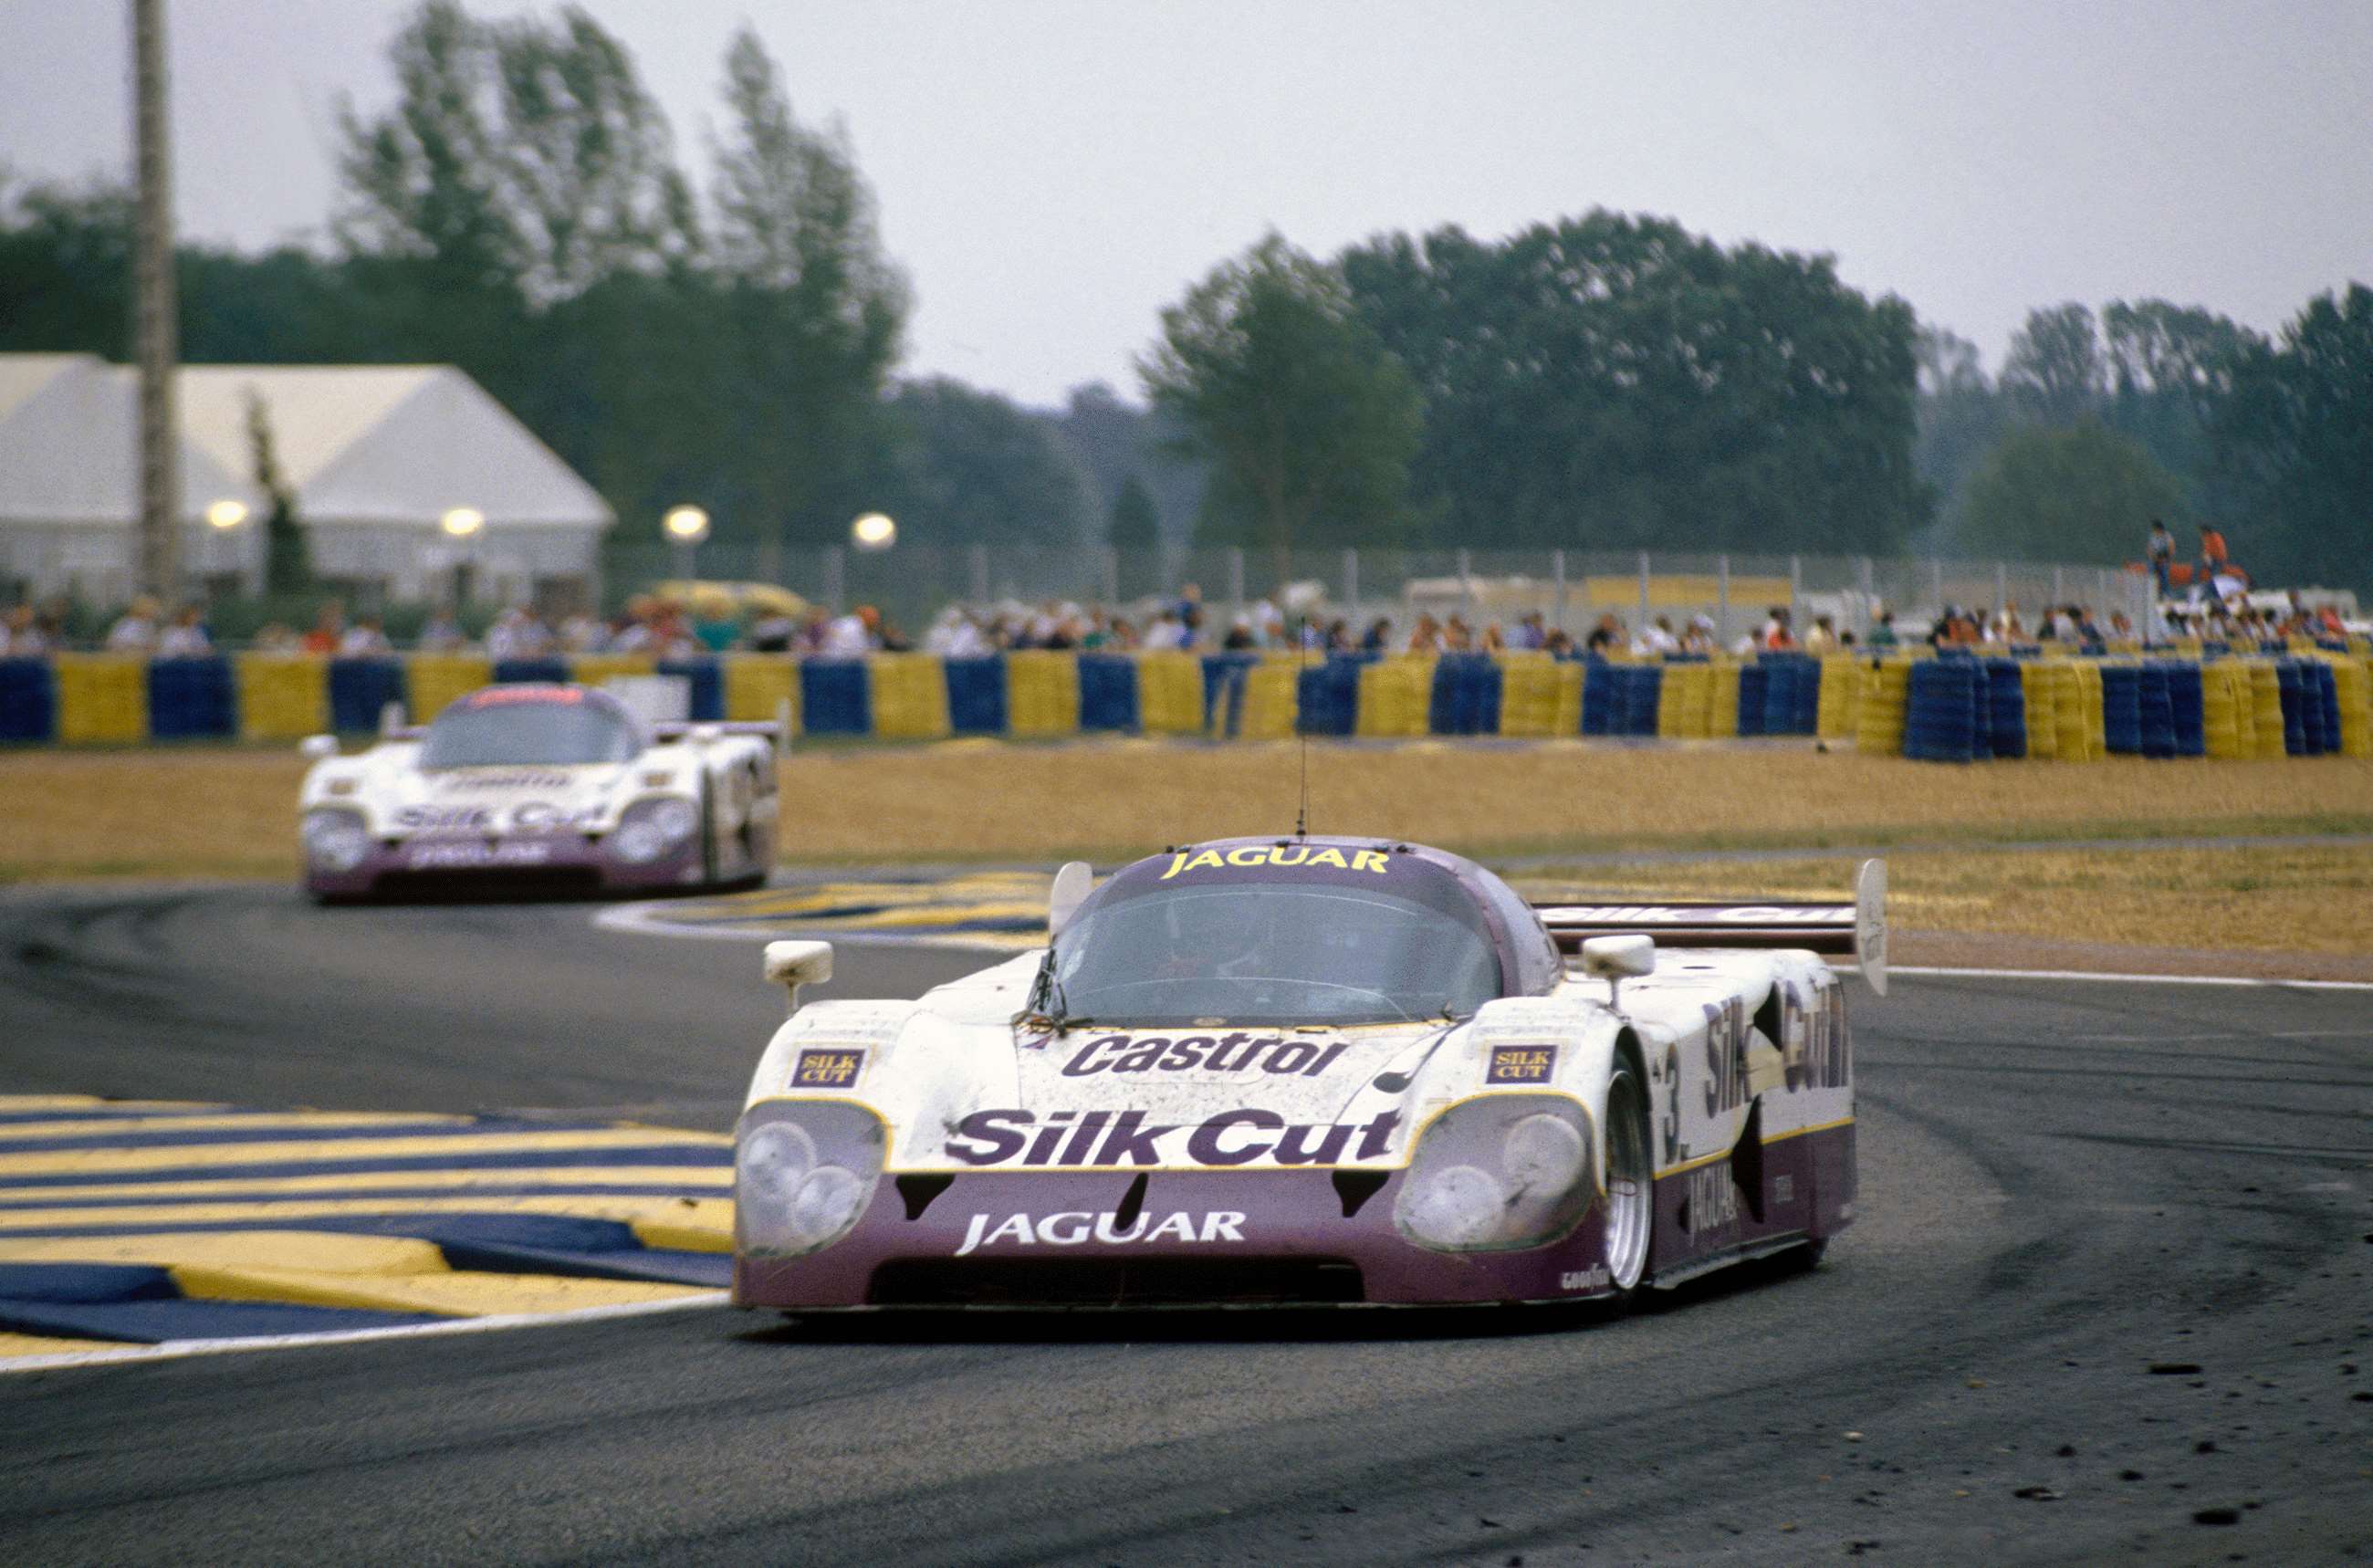 le-mans-1990-silk-cut-twr-jaguar-motorsport-images-goodwood-10122019.jpg